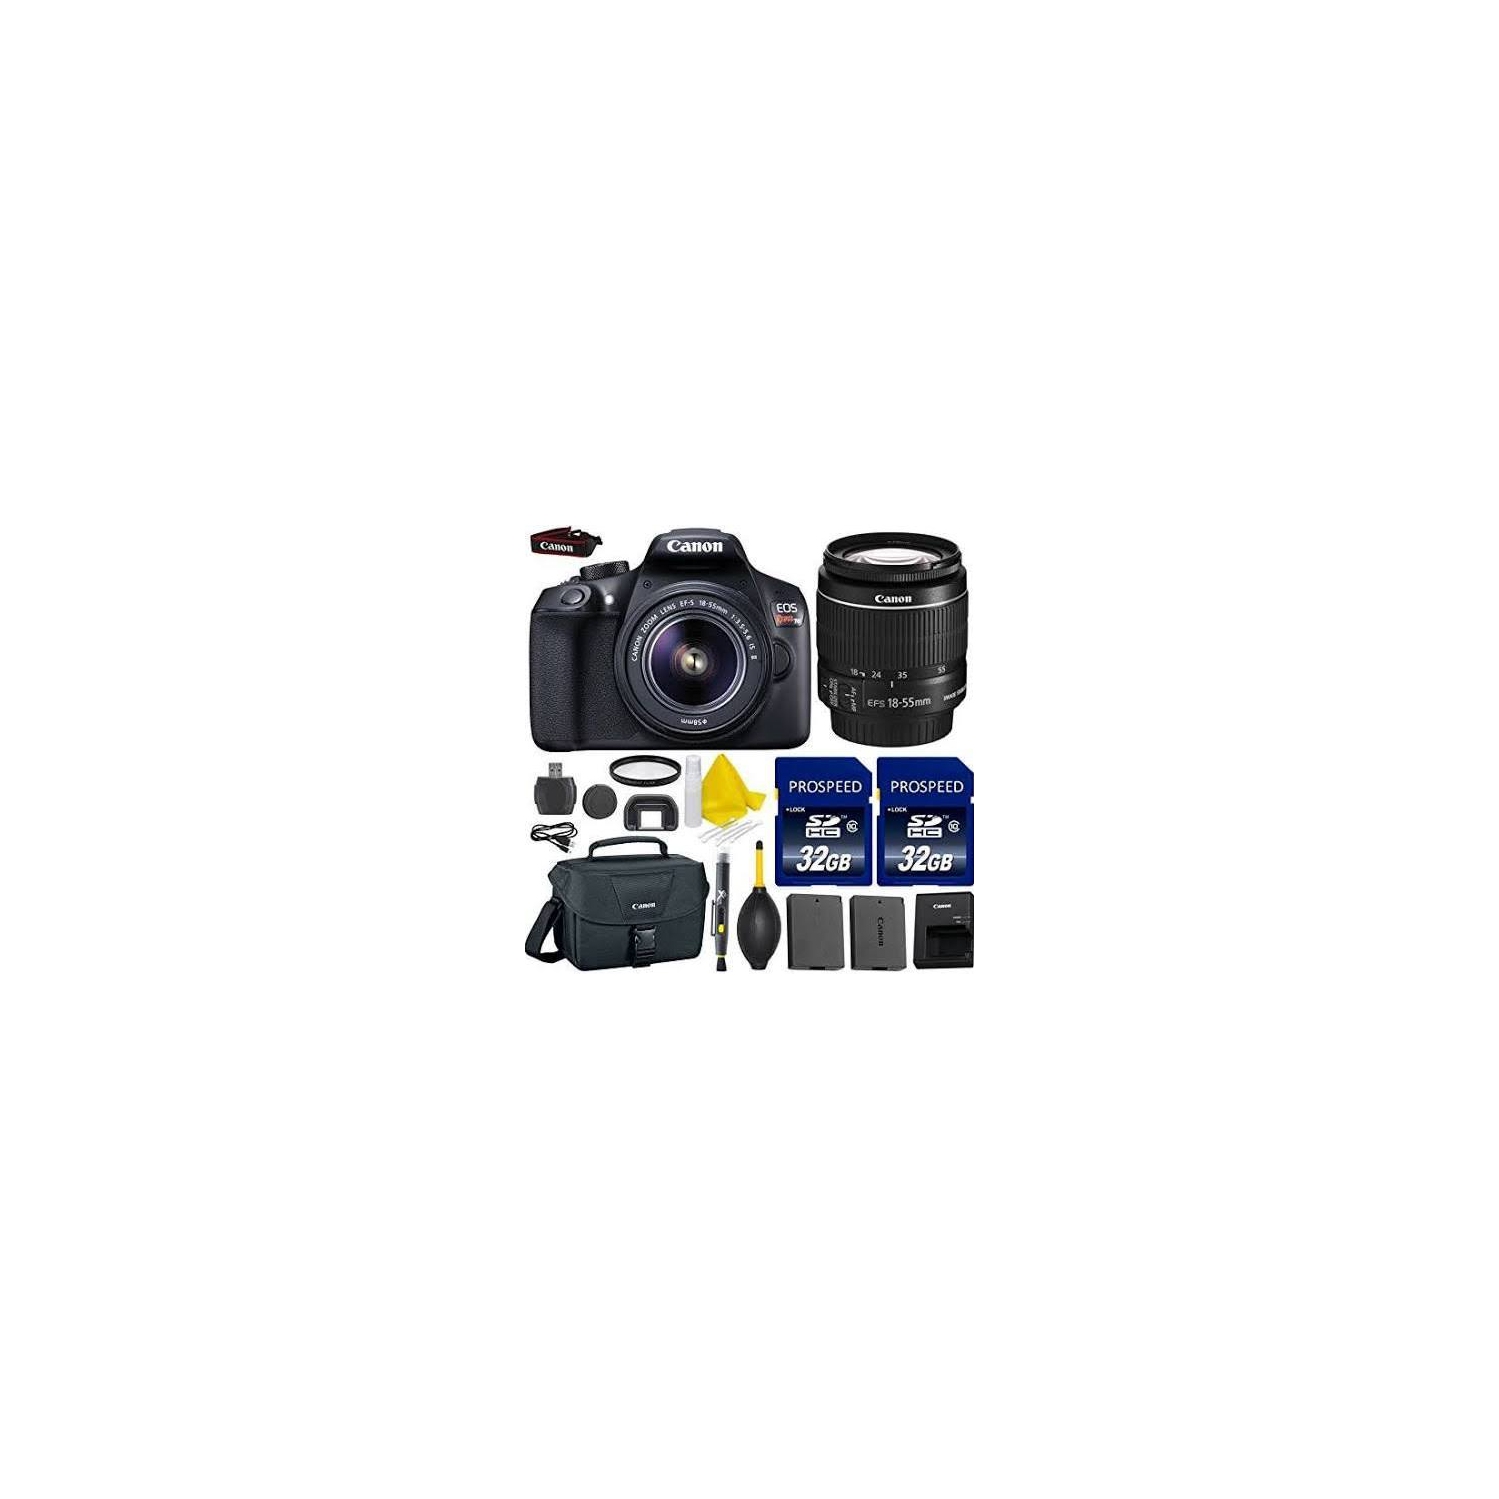 Canon EOS Rebel1300D / T6 WiFi Enabled 18MP EF-S Digital SLR Camera Bundle | Canon EF-S 18-55mm Is Lens Bundle - US Version w/ Seller Warranty